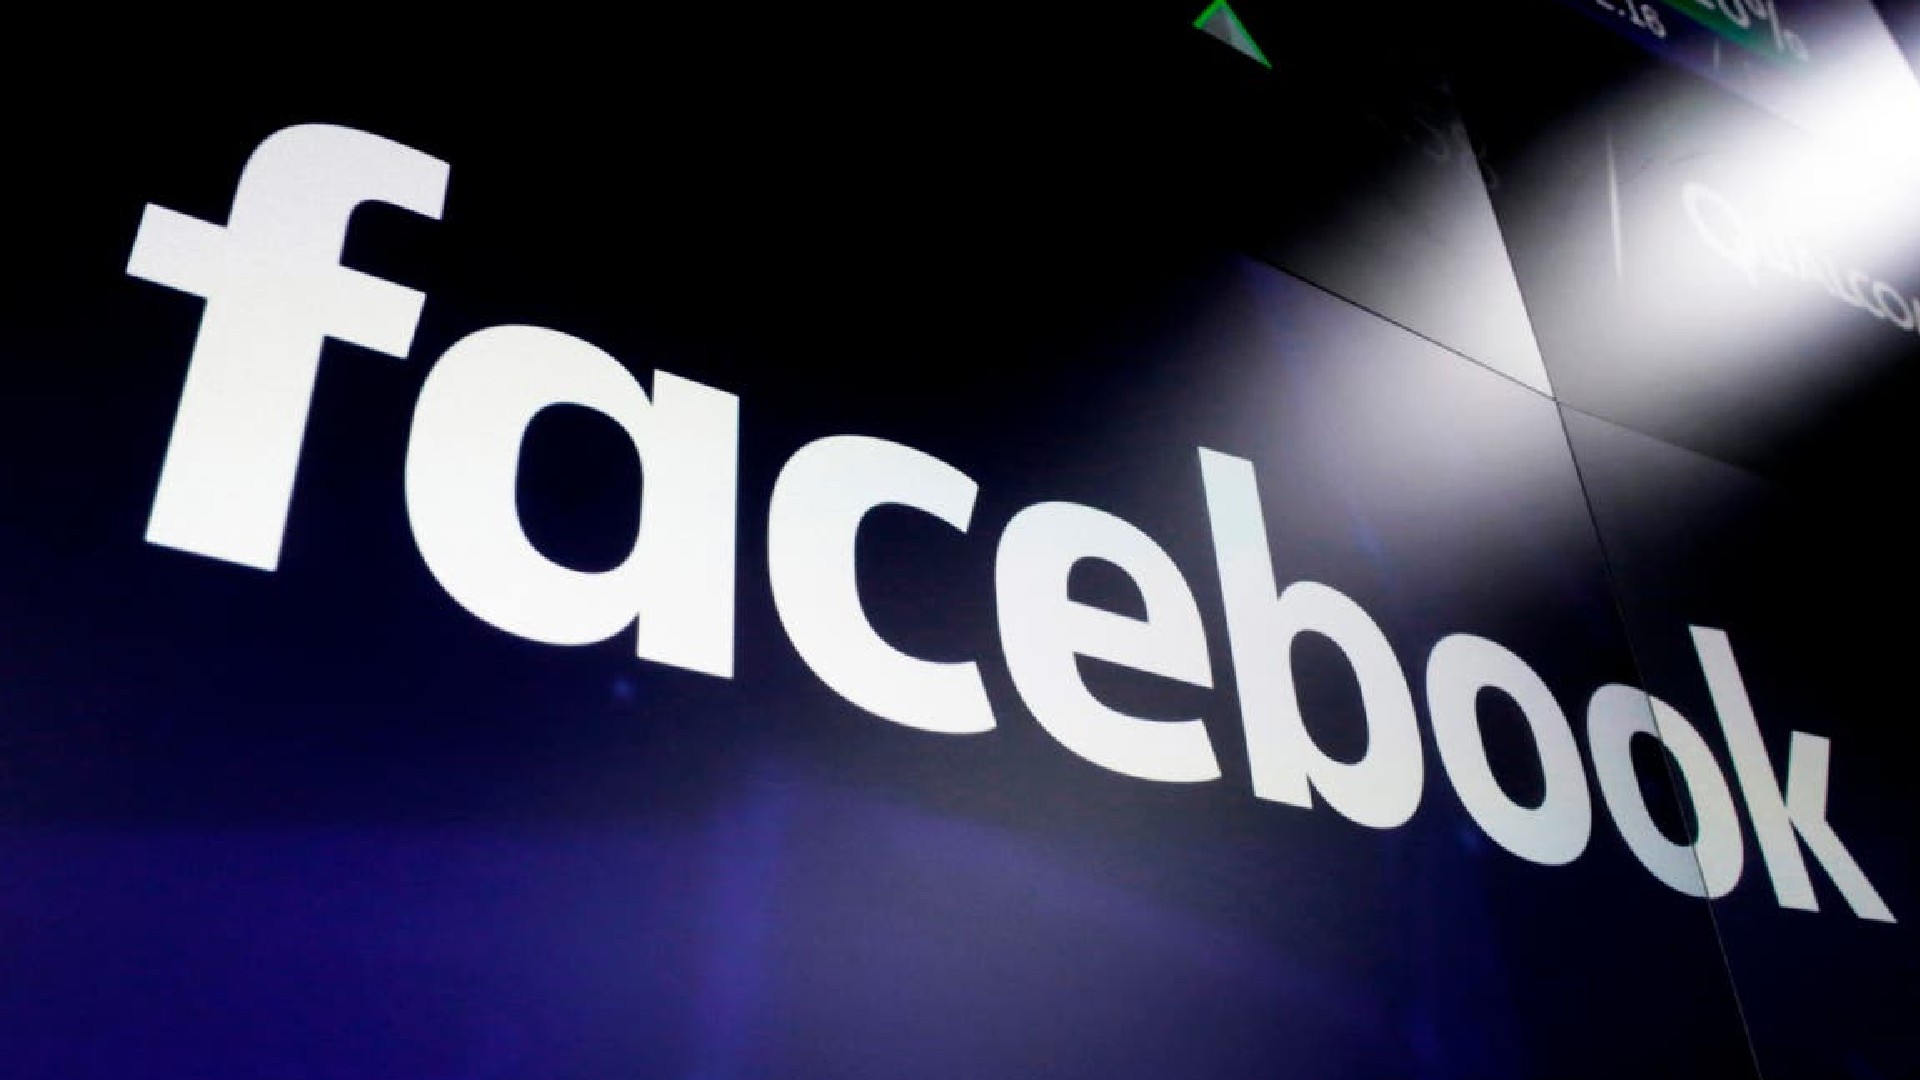 Facebook Creators Will Get $1 Billion Through 2022